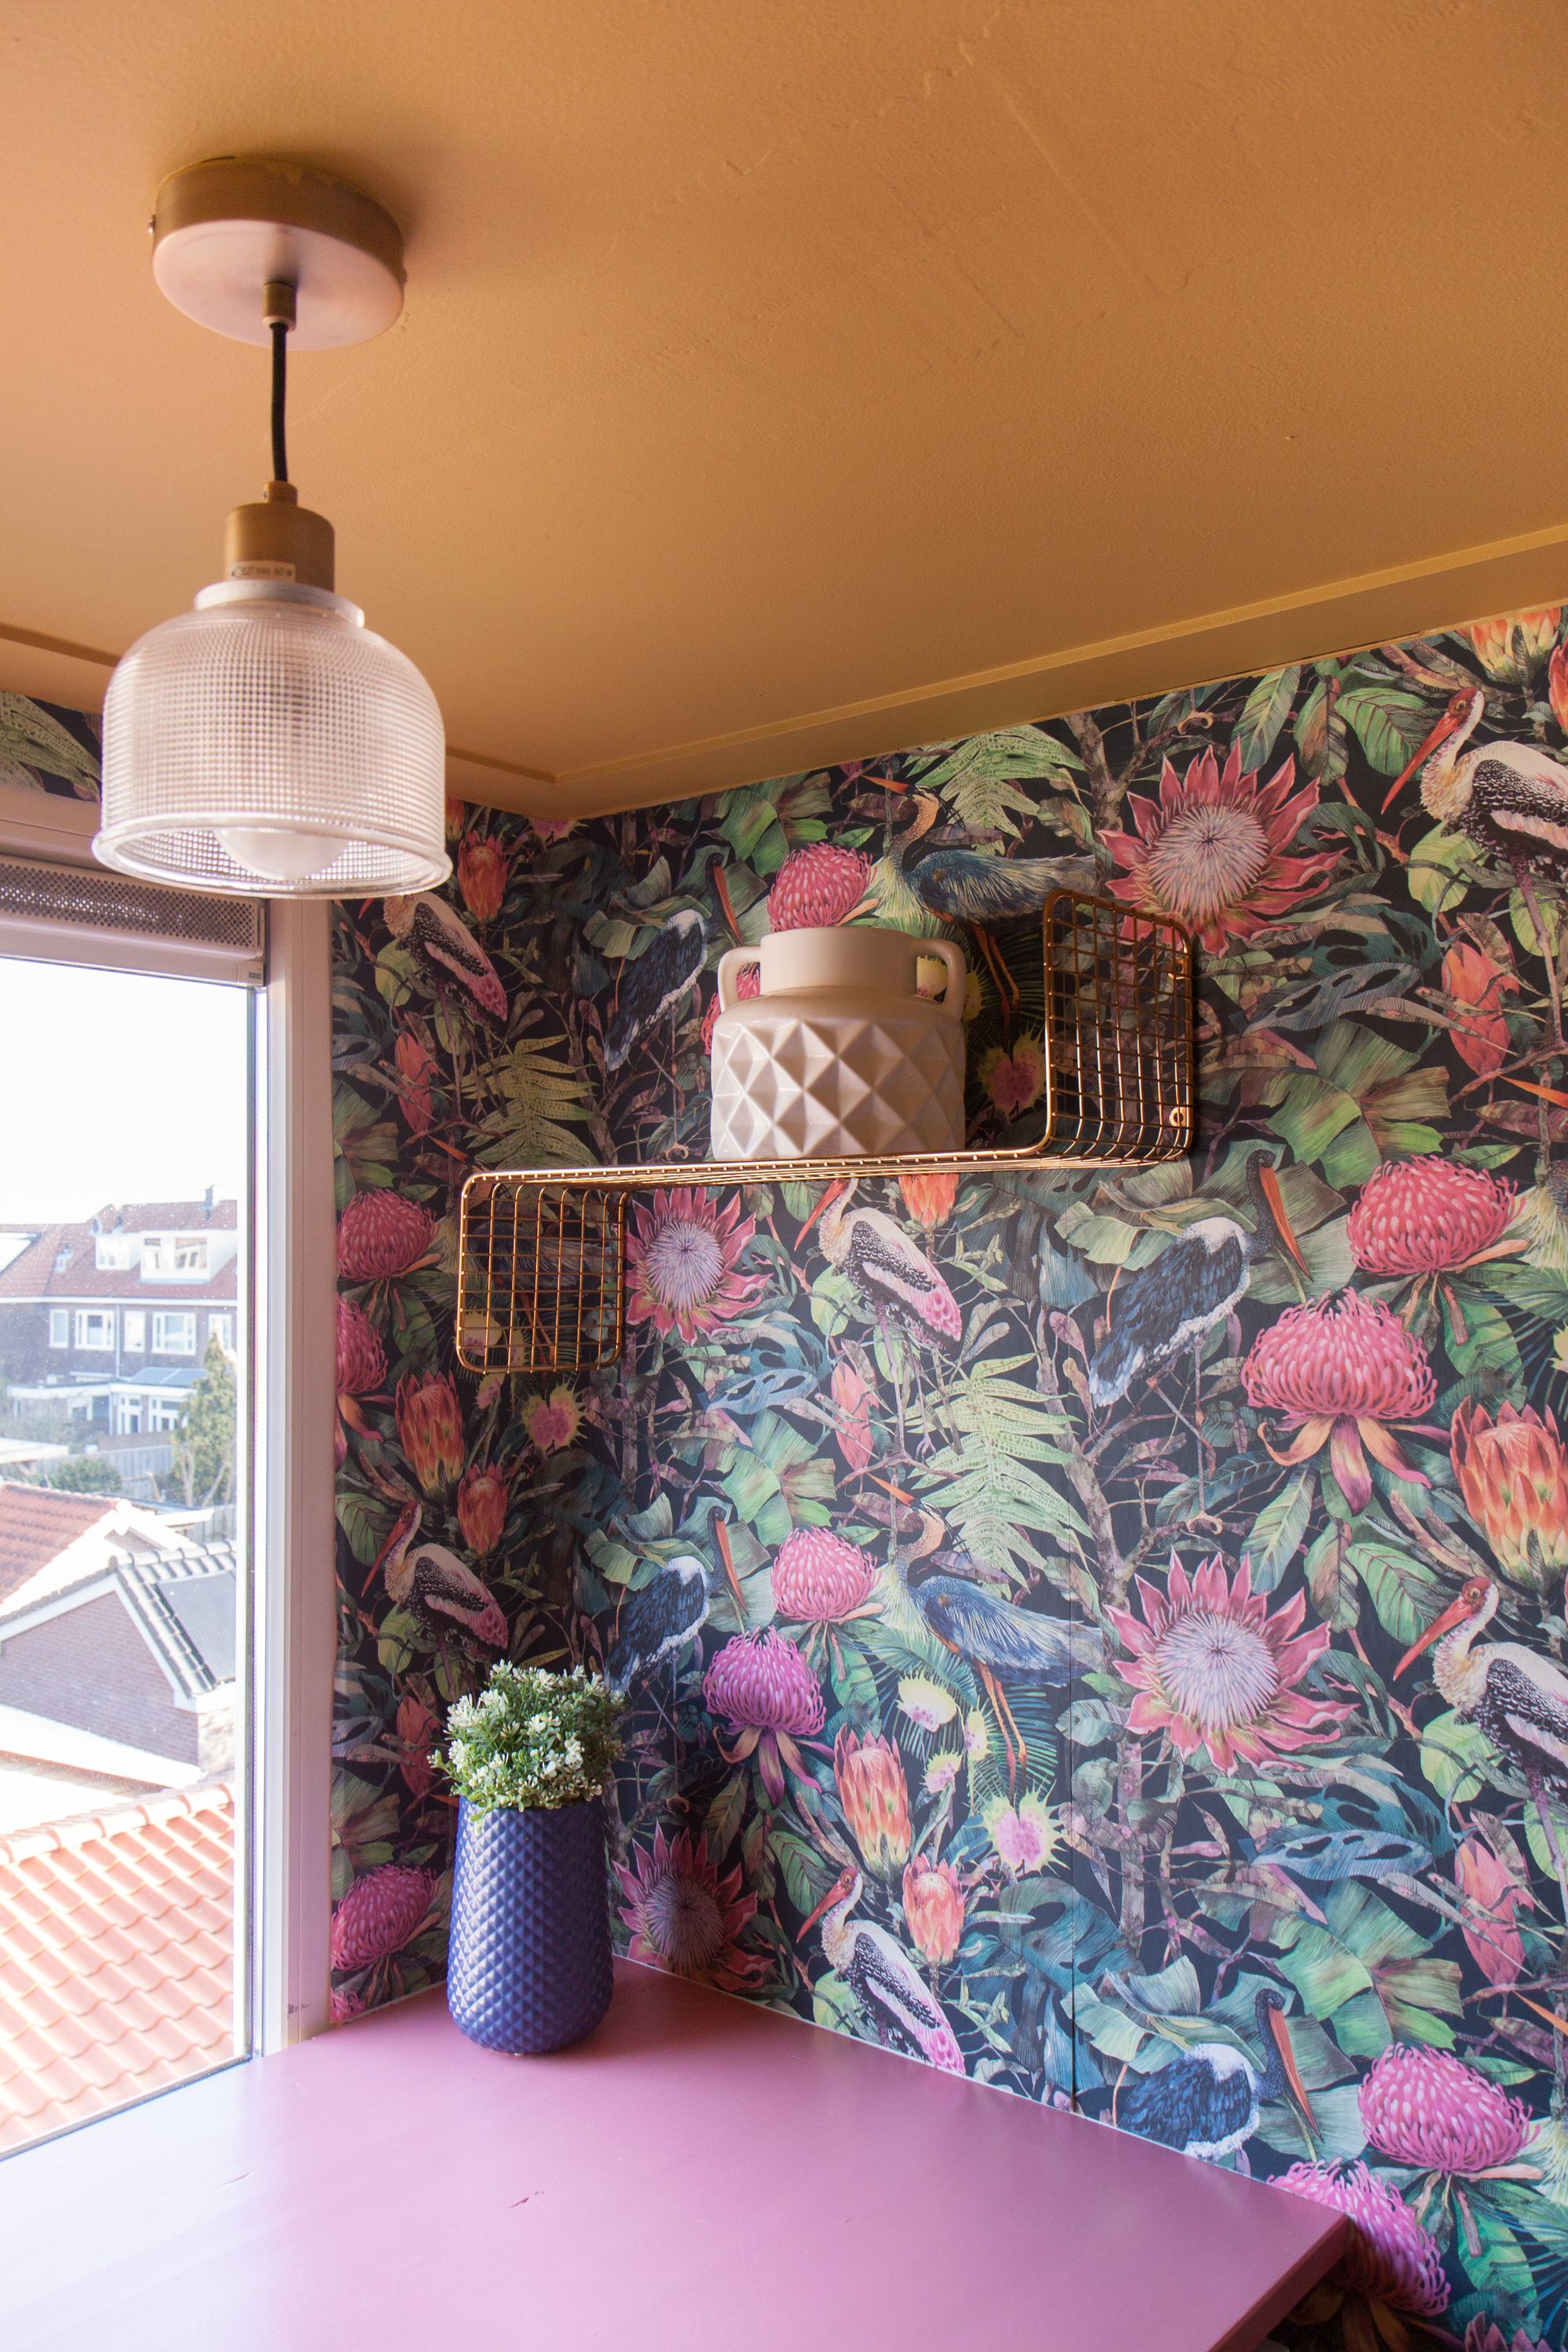 Botanisch behang, bloempot, roze plank en gouden wandplank.